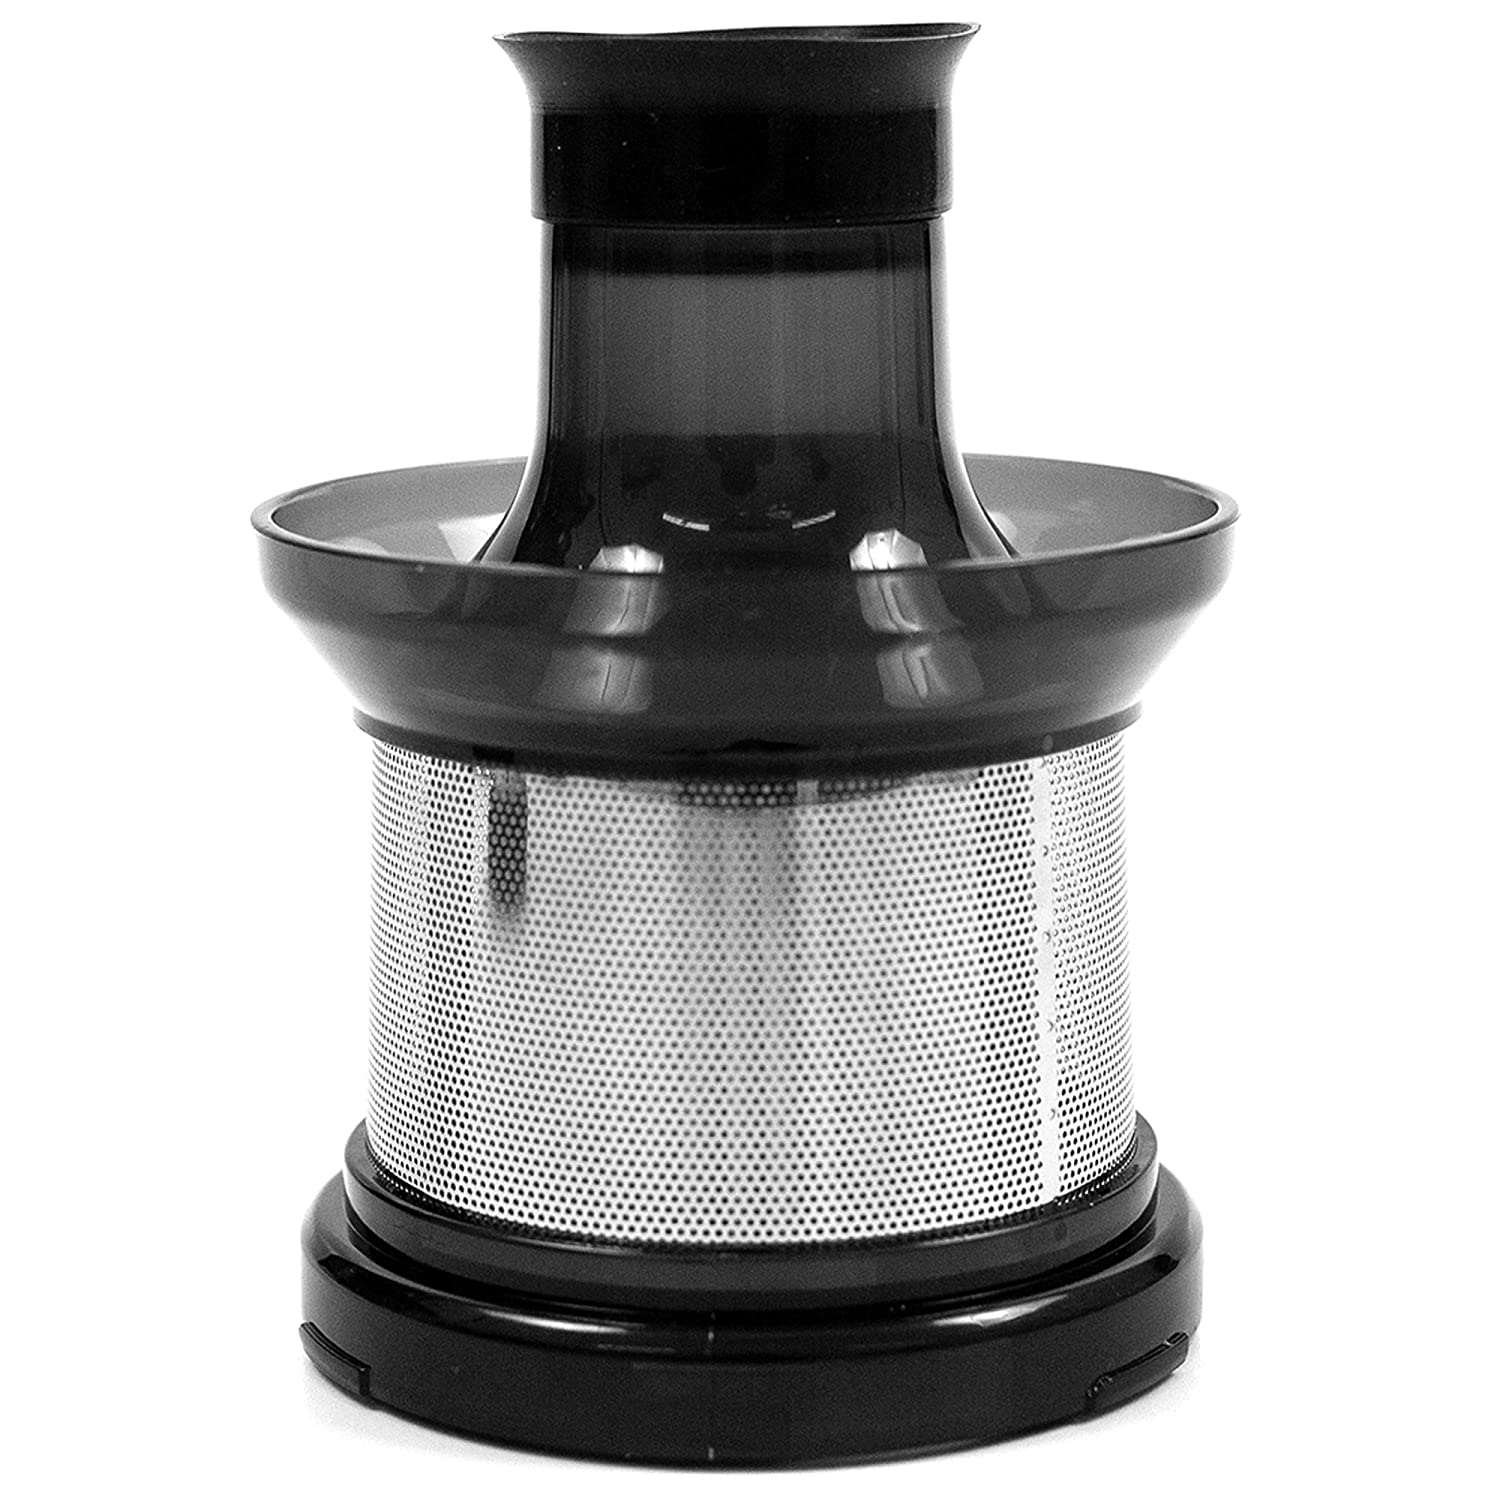 Geek Glantoir H1, Dust Filter Compatible with Glantoir A9 Wireless Vacuum Cleaner, Black